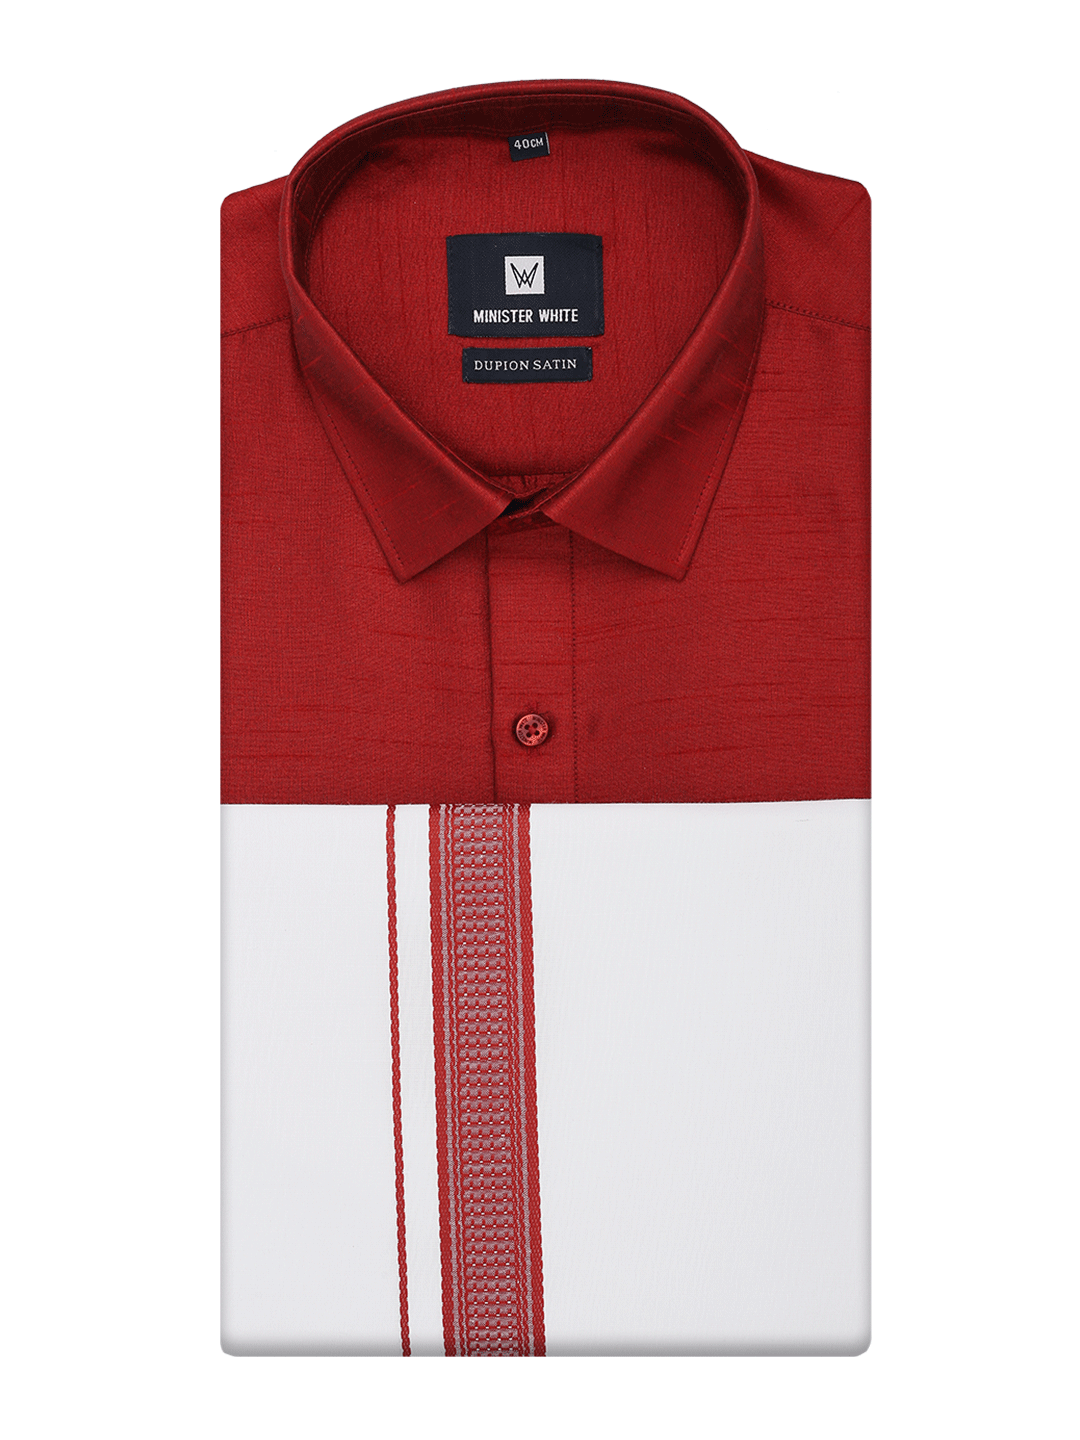 Mens Red Dupion Satin Color Shirt with Matching Border Dhoti Combo Gora